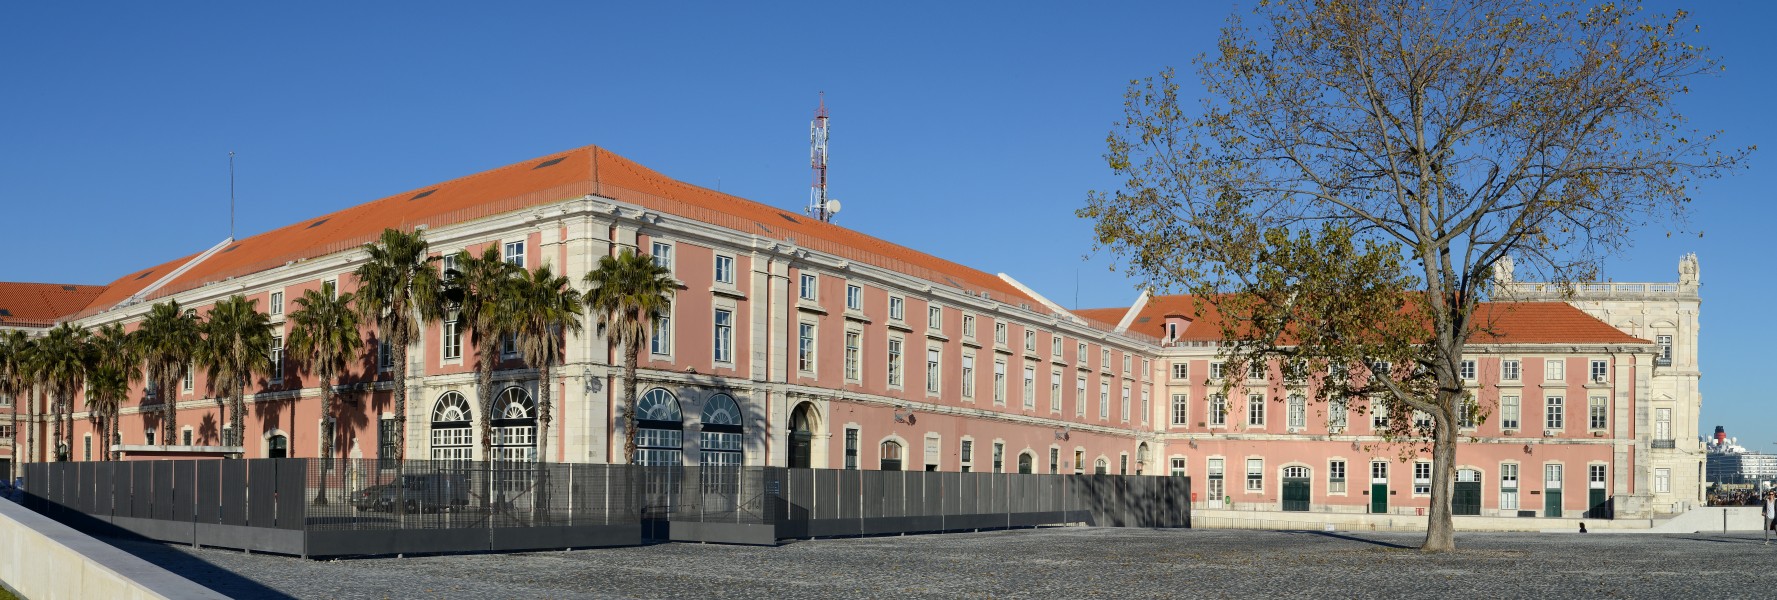 Lisboa January 2015-8a